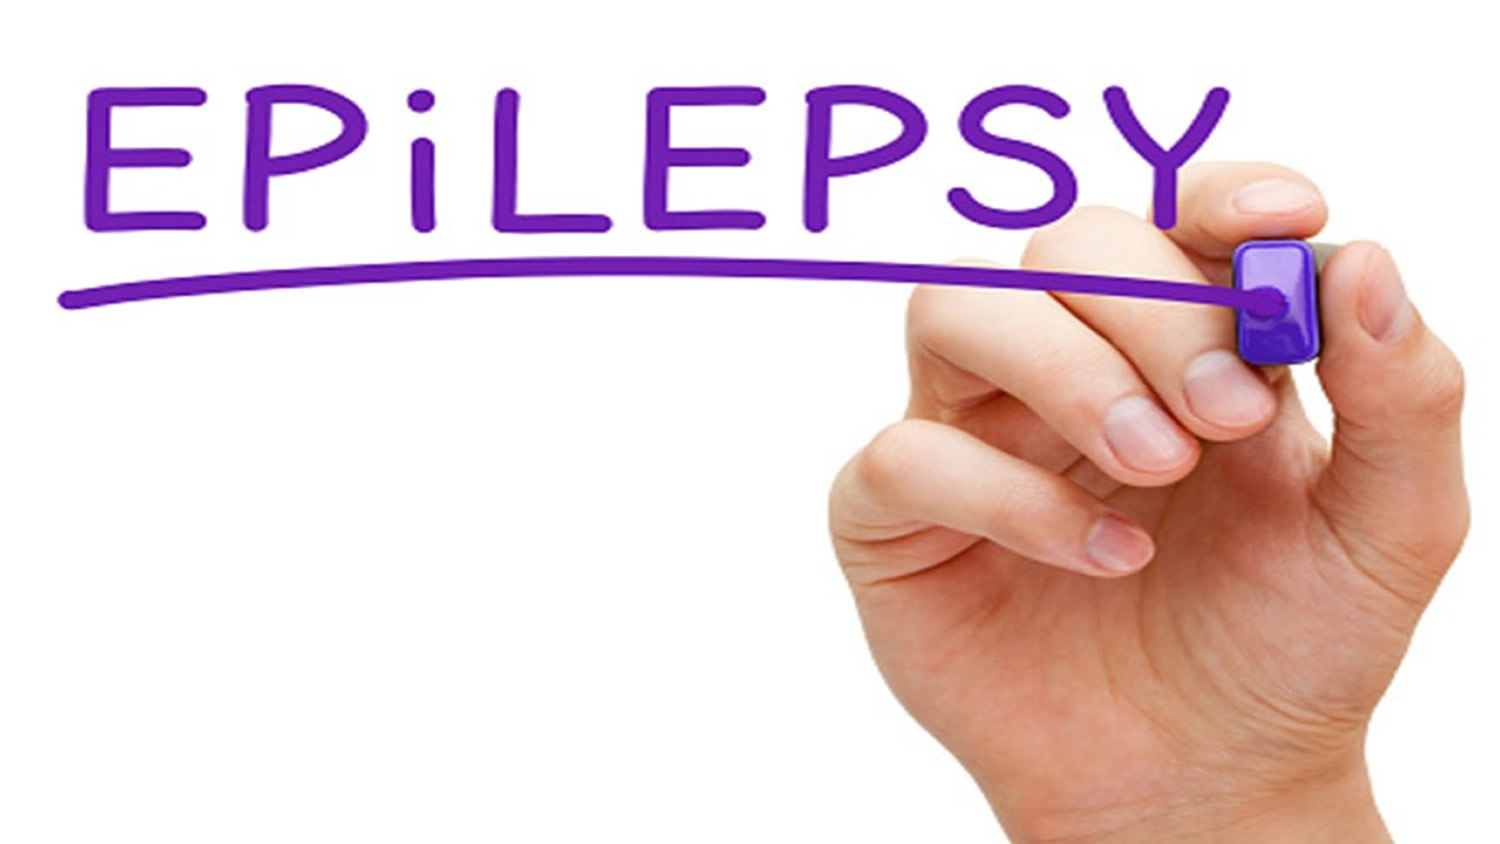 Epilepsie Definition Symptome Medikamente